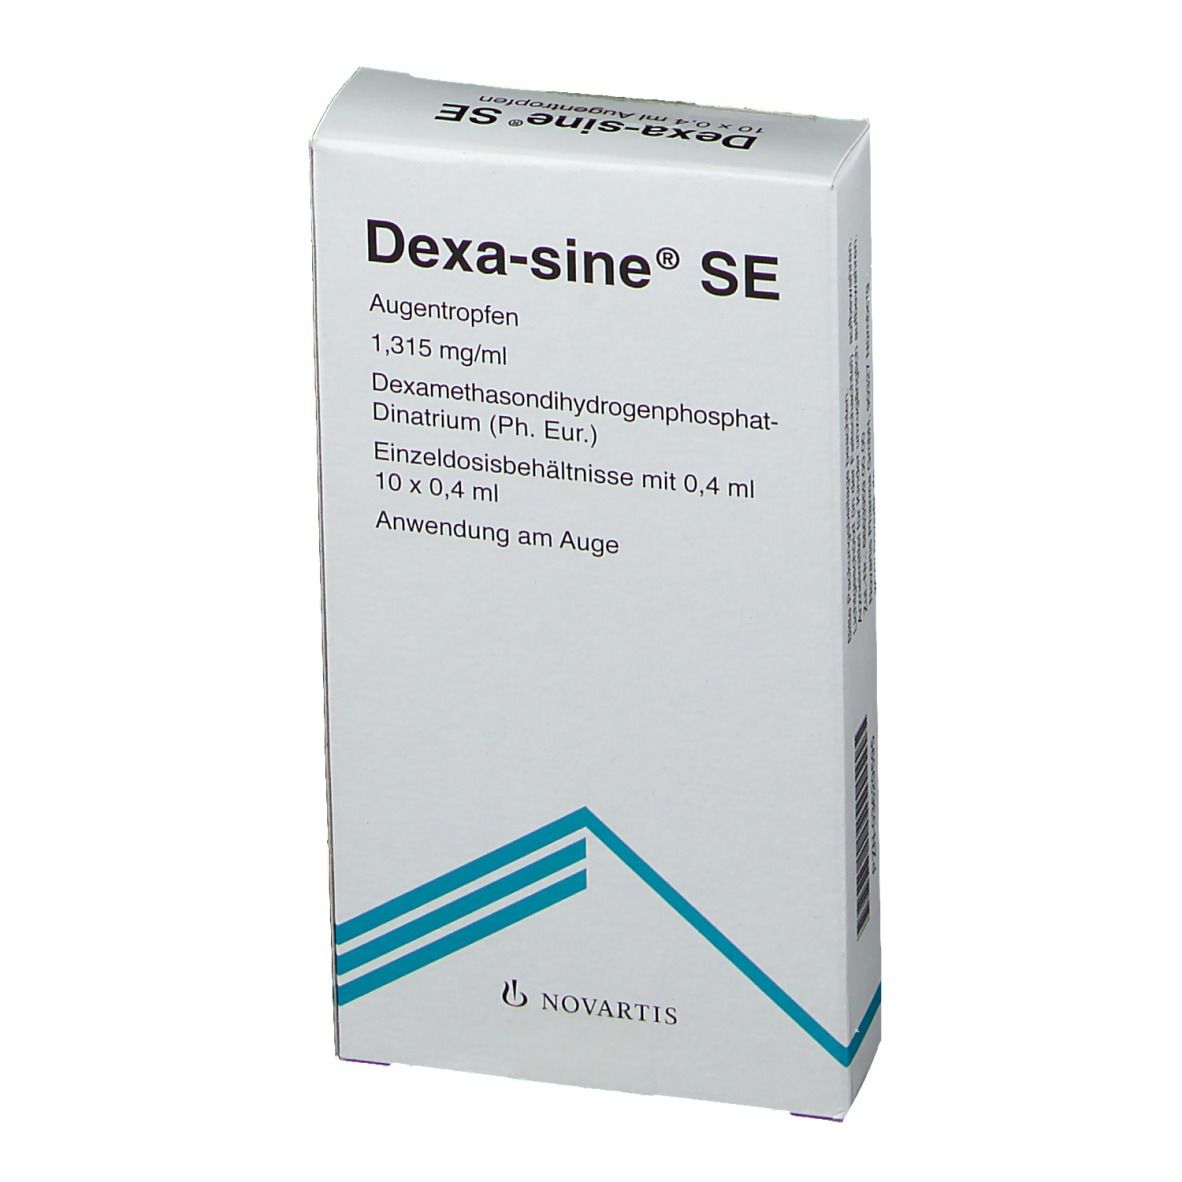 Dexa® Sine SE 1 mg/ml